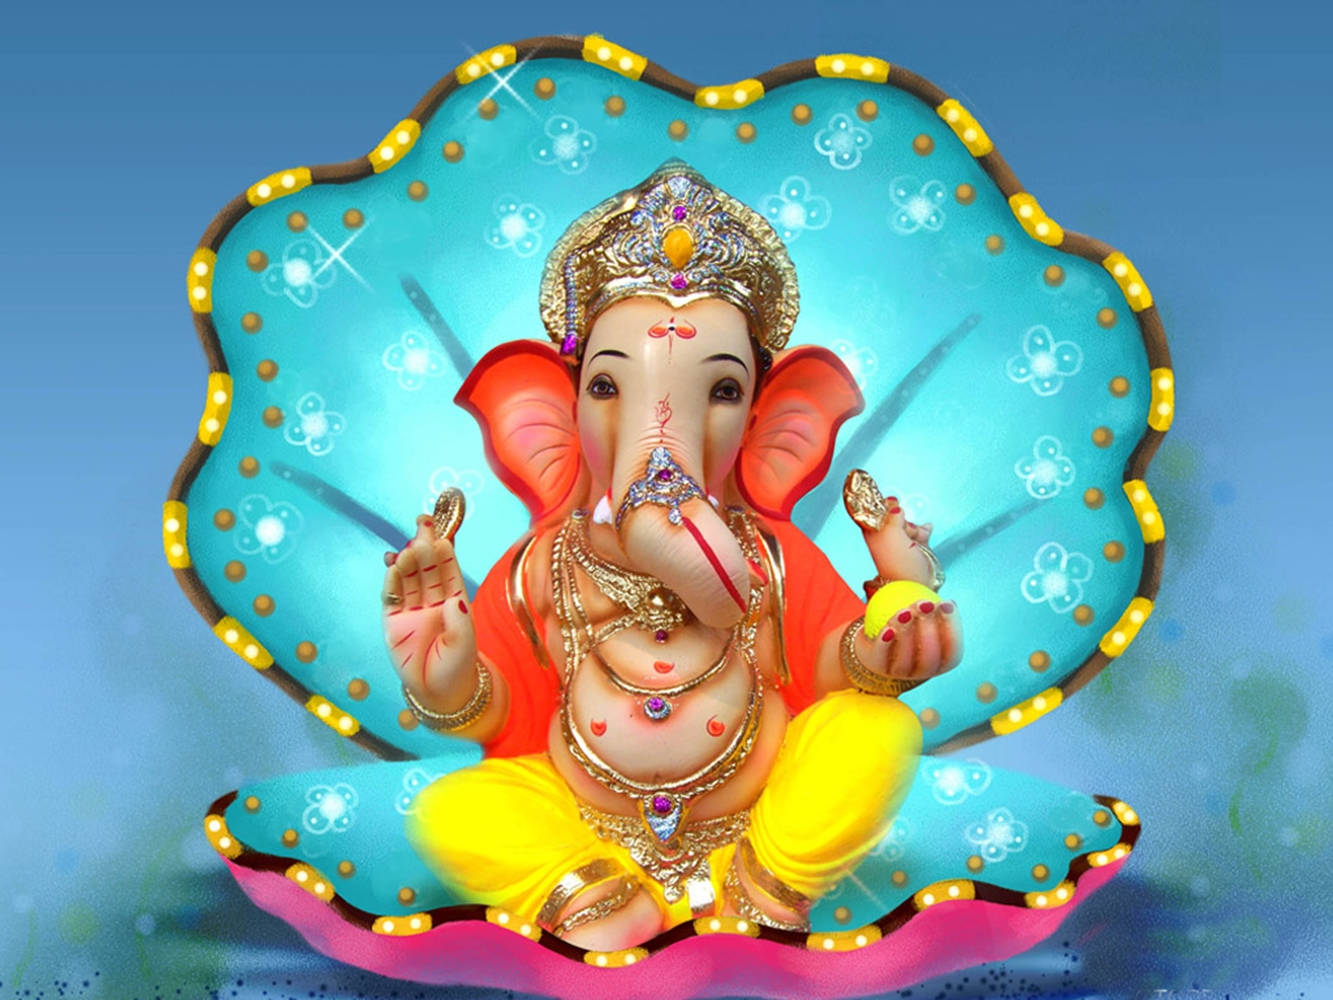 Free Ganesh Desktop Wallpaper Downloads, [100+] Ganesh Desktop Wallpapers  for FREE 